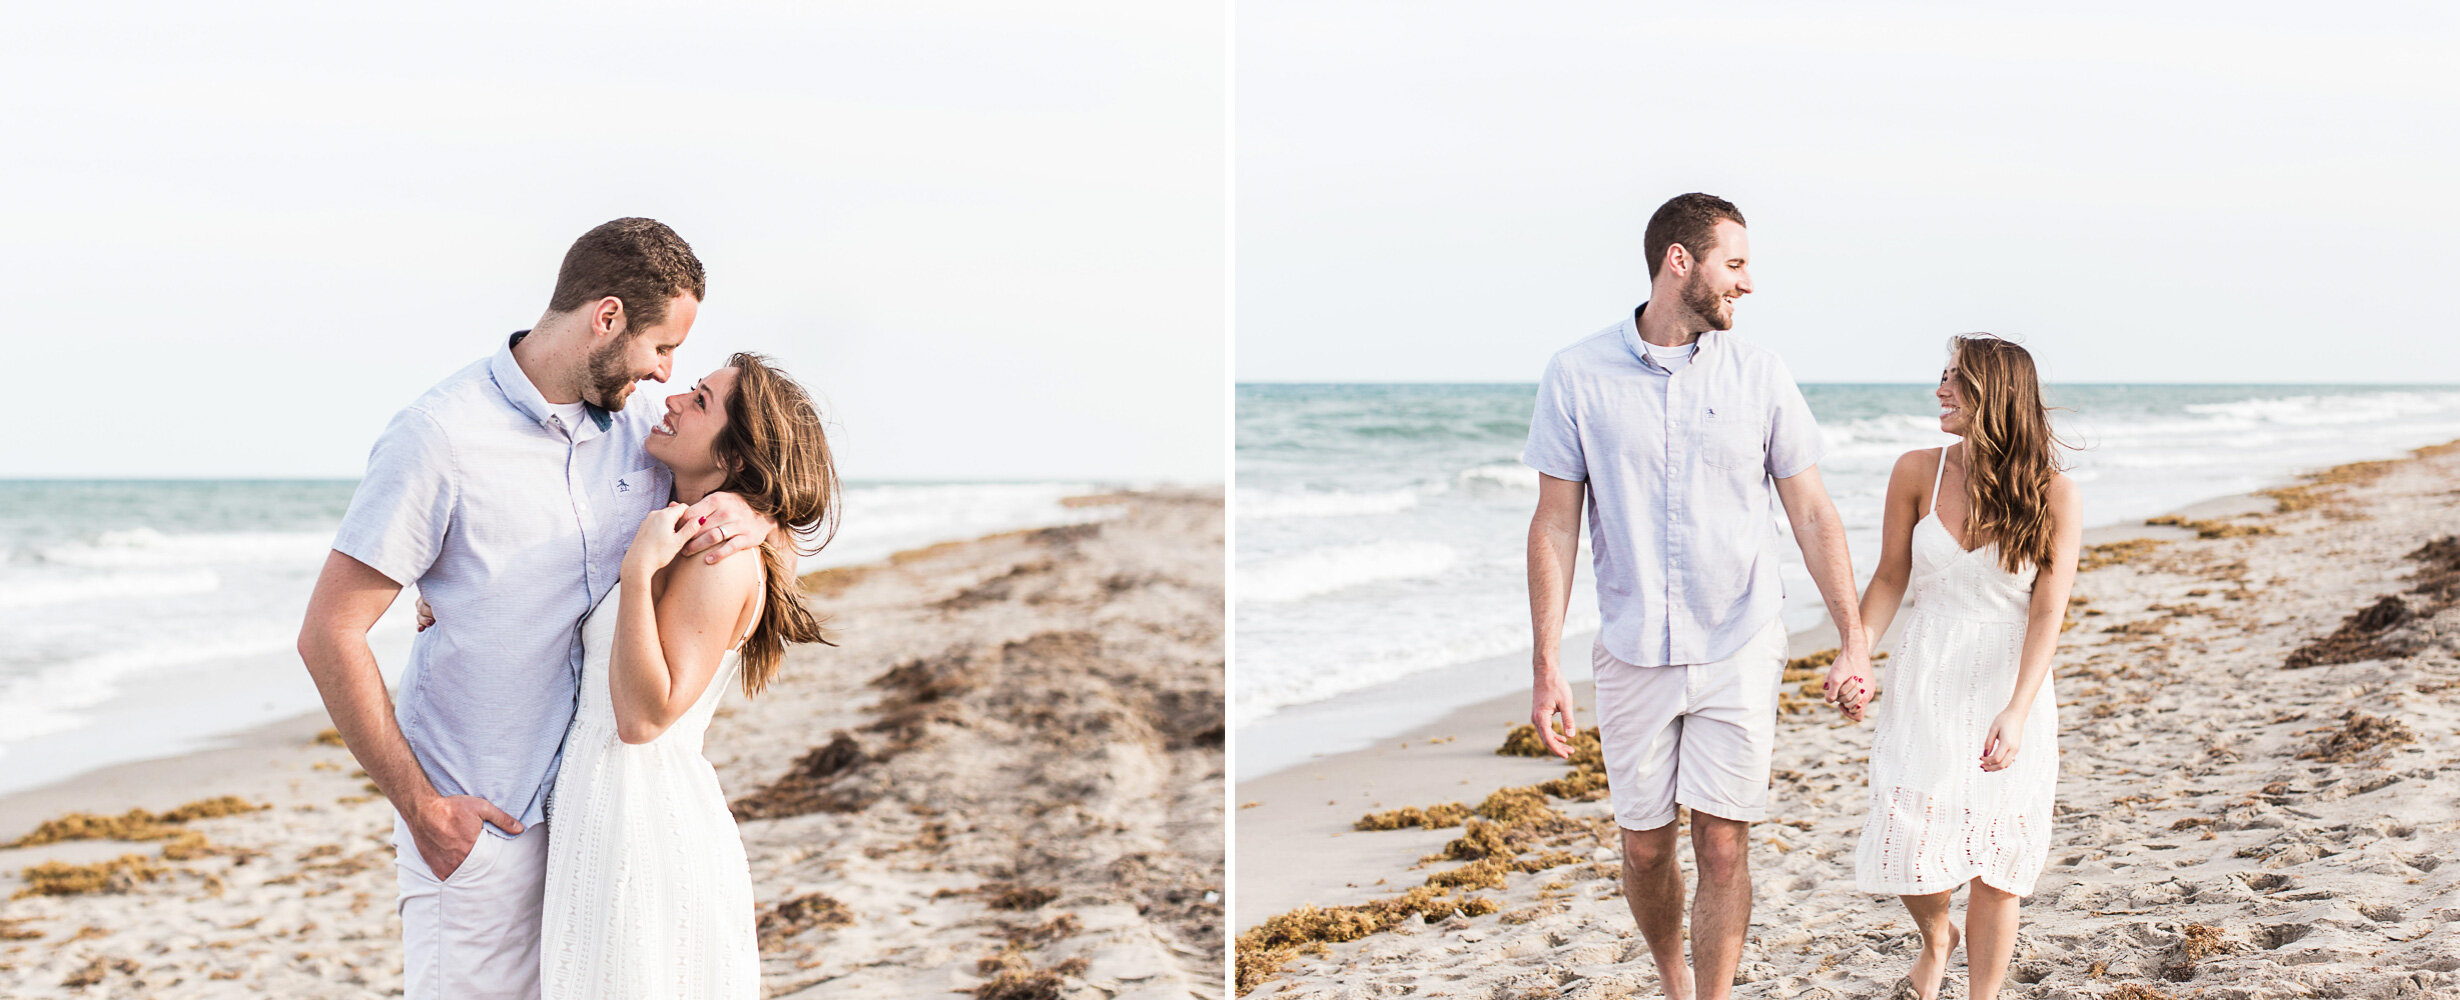 Lifestyle Couples Photographer South Florida